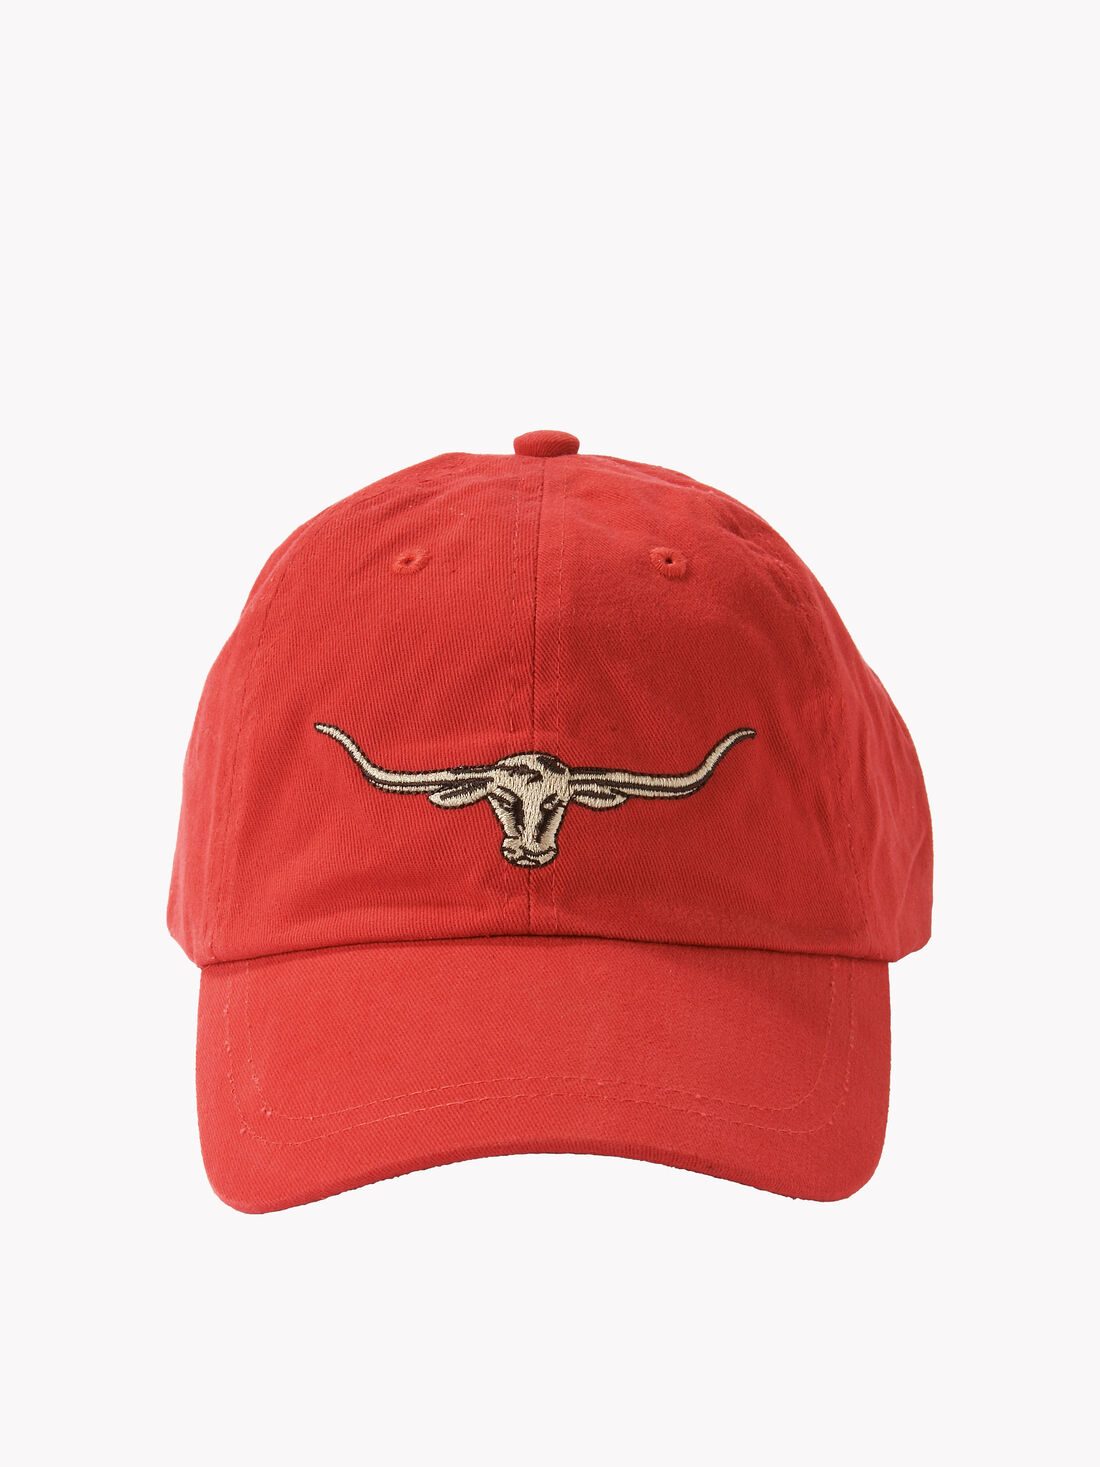 Steers Head Logo Cap - Hats & Caps at R.M.Williams®